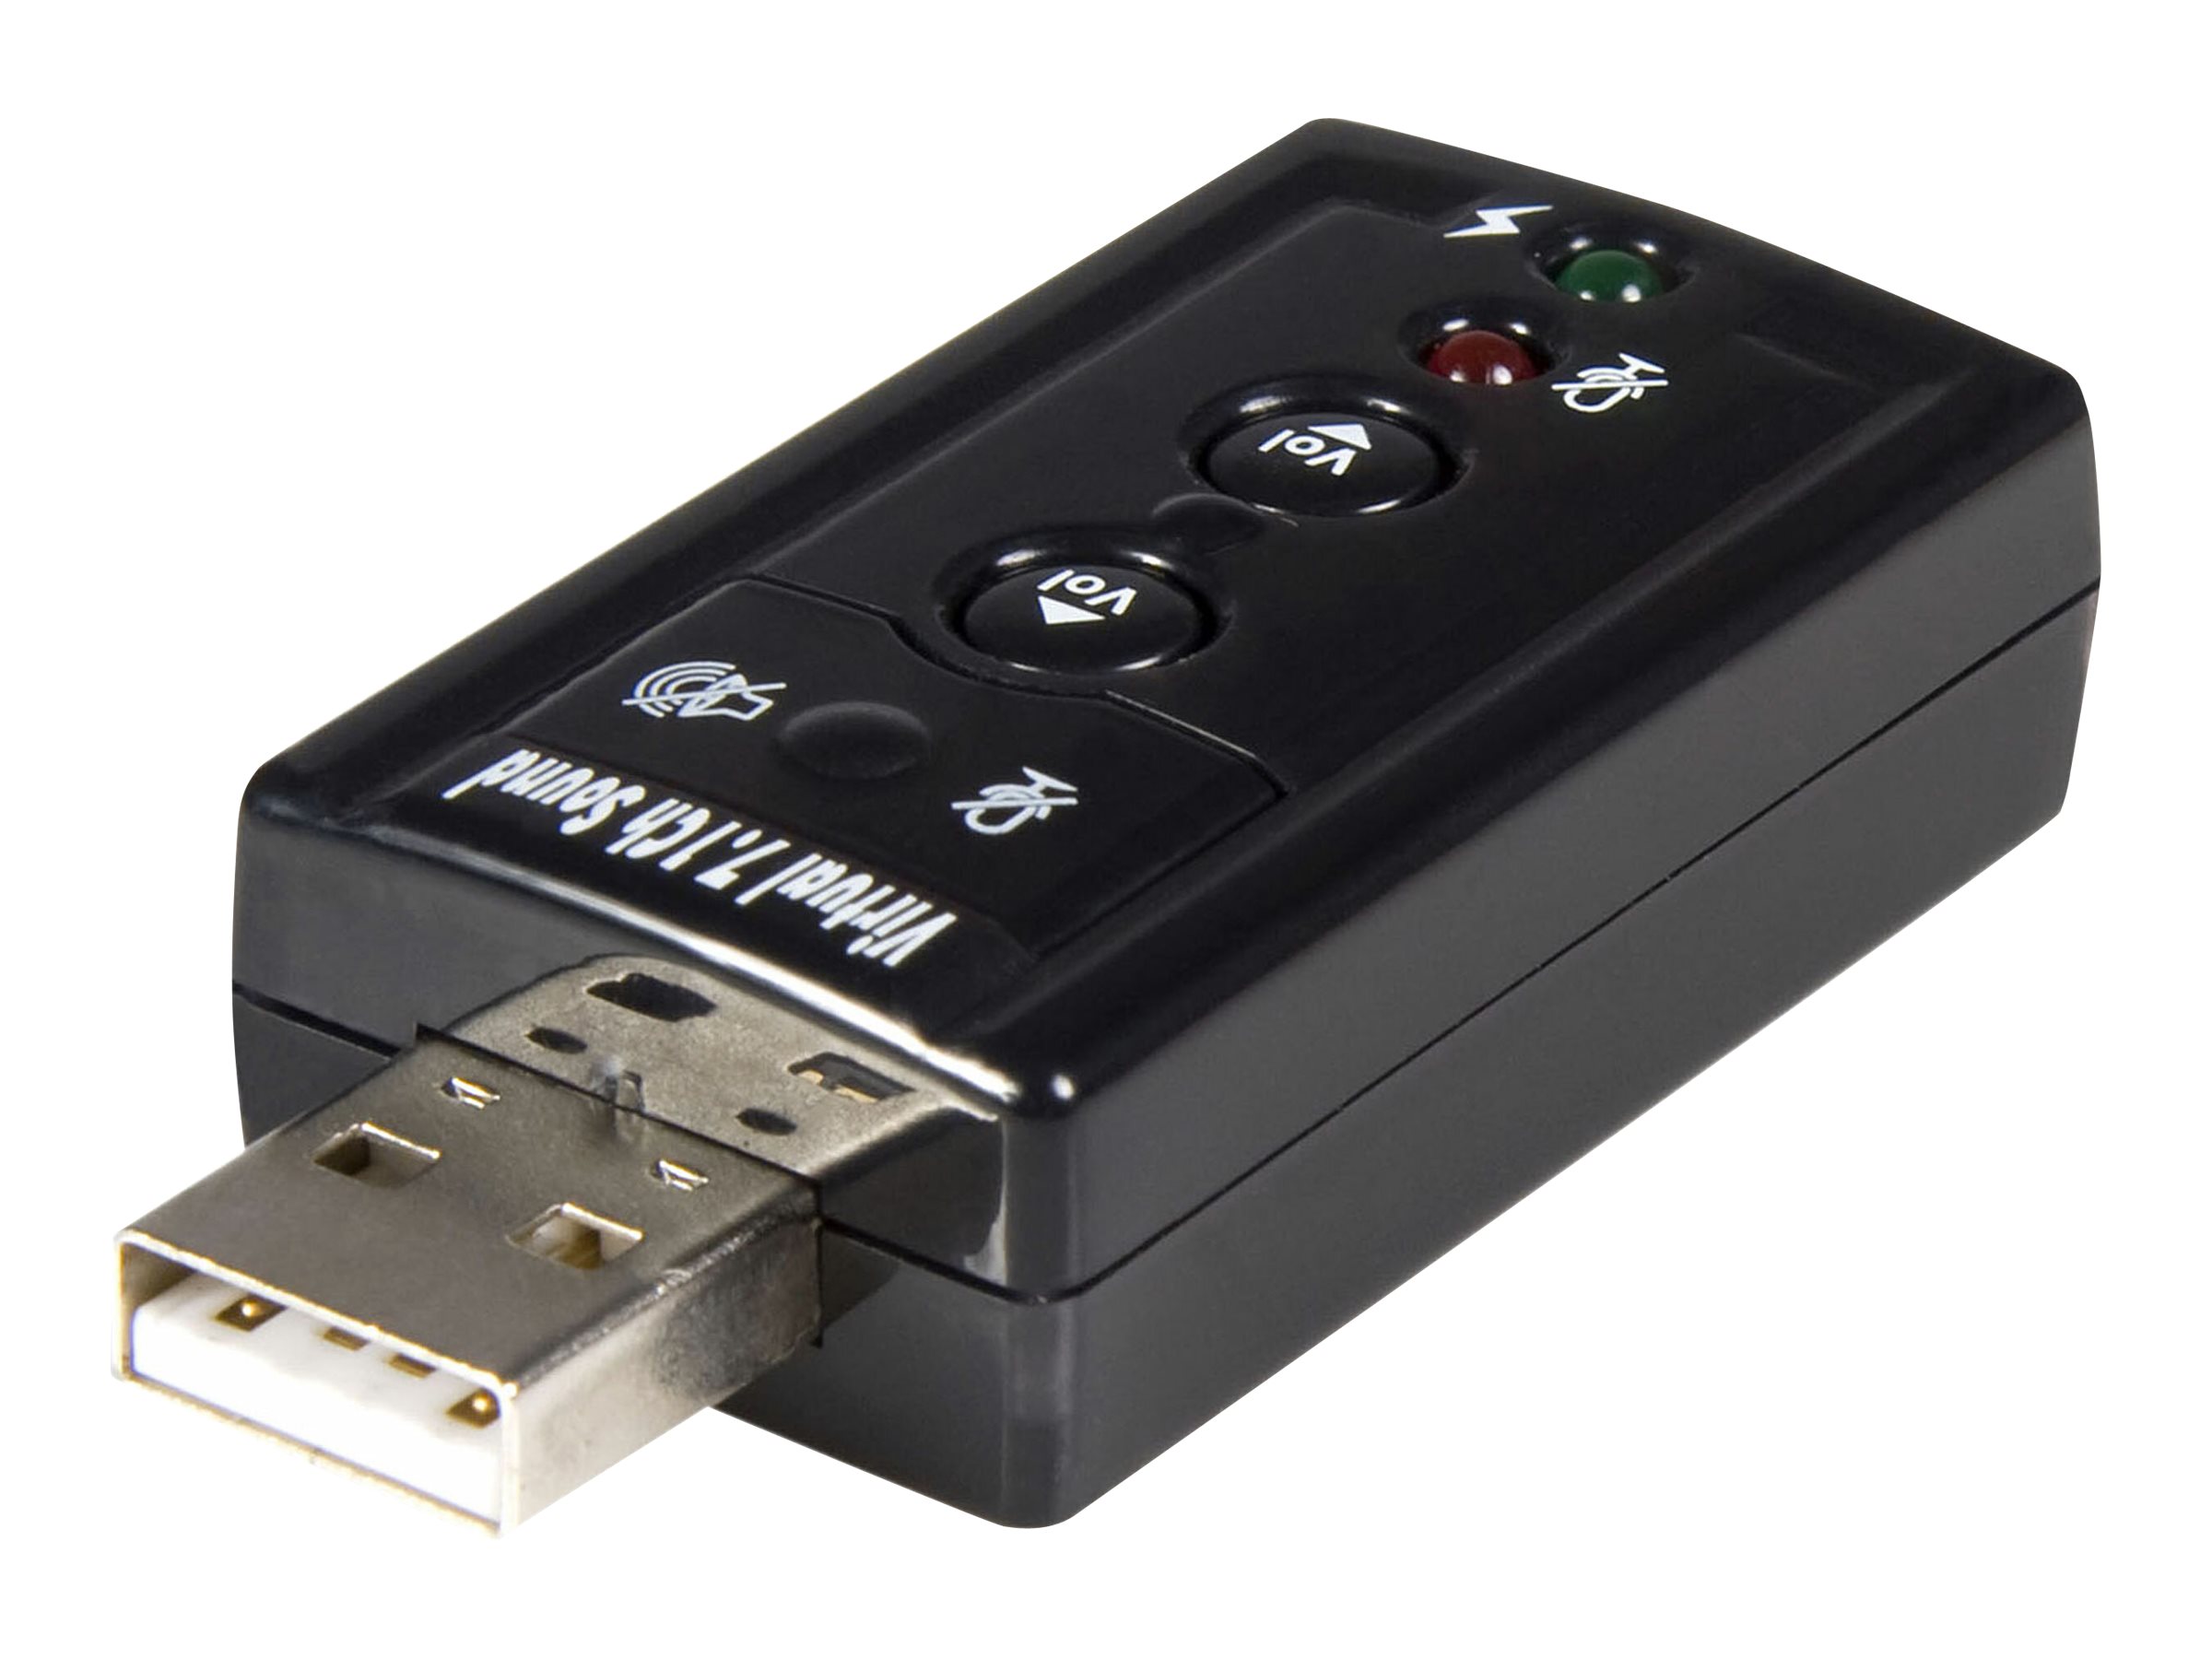 USB Sound Card 7.1 Channel USB External Sound Card 3D Surround Sound with Button Control Sound Card 